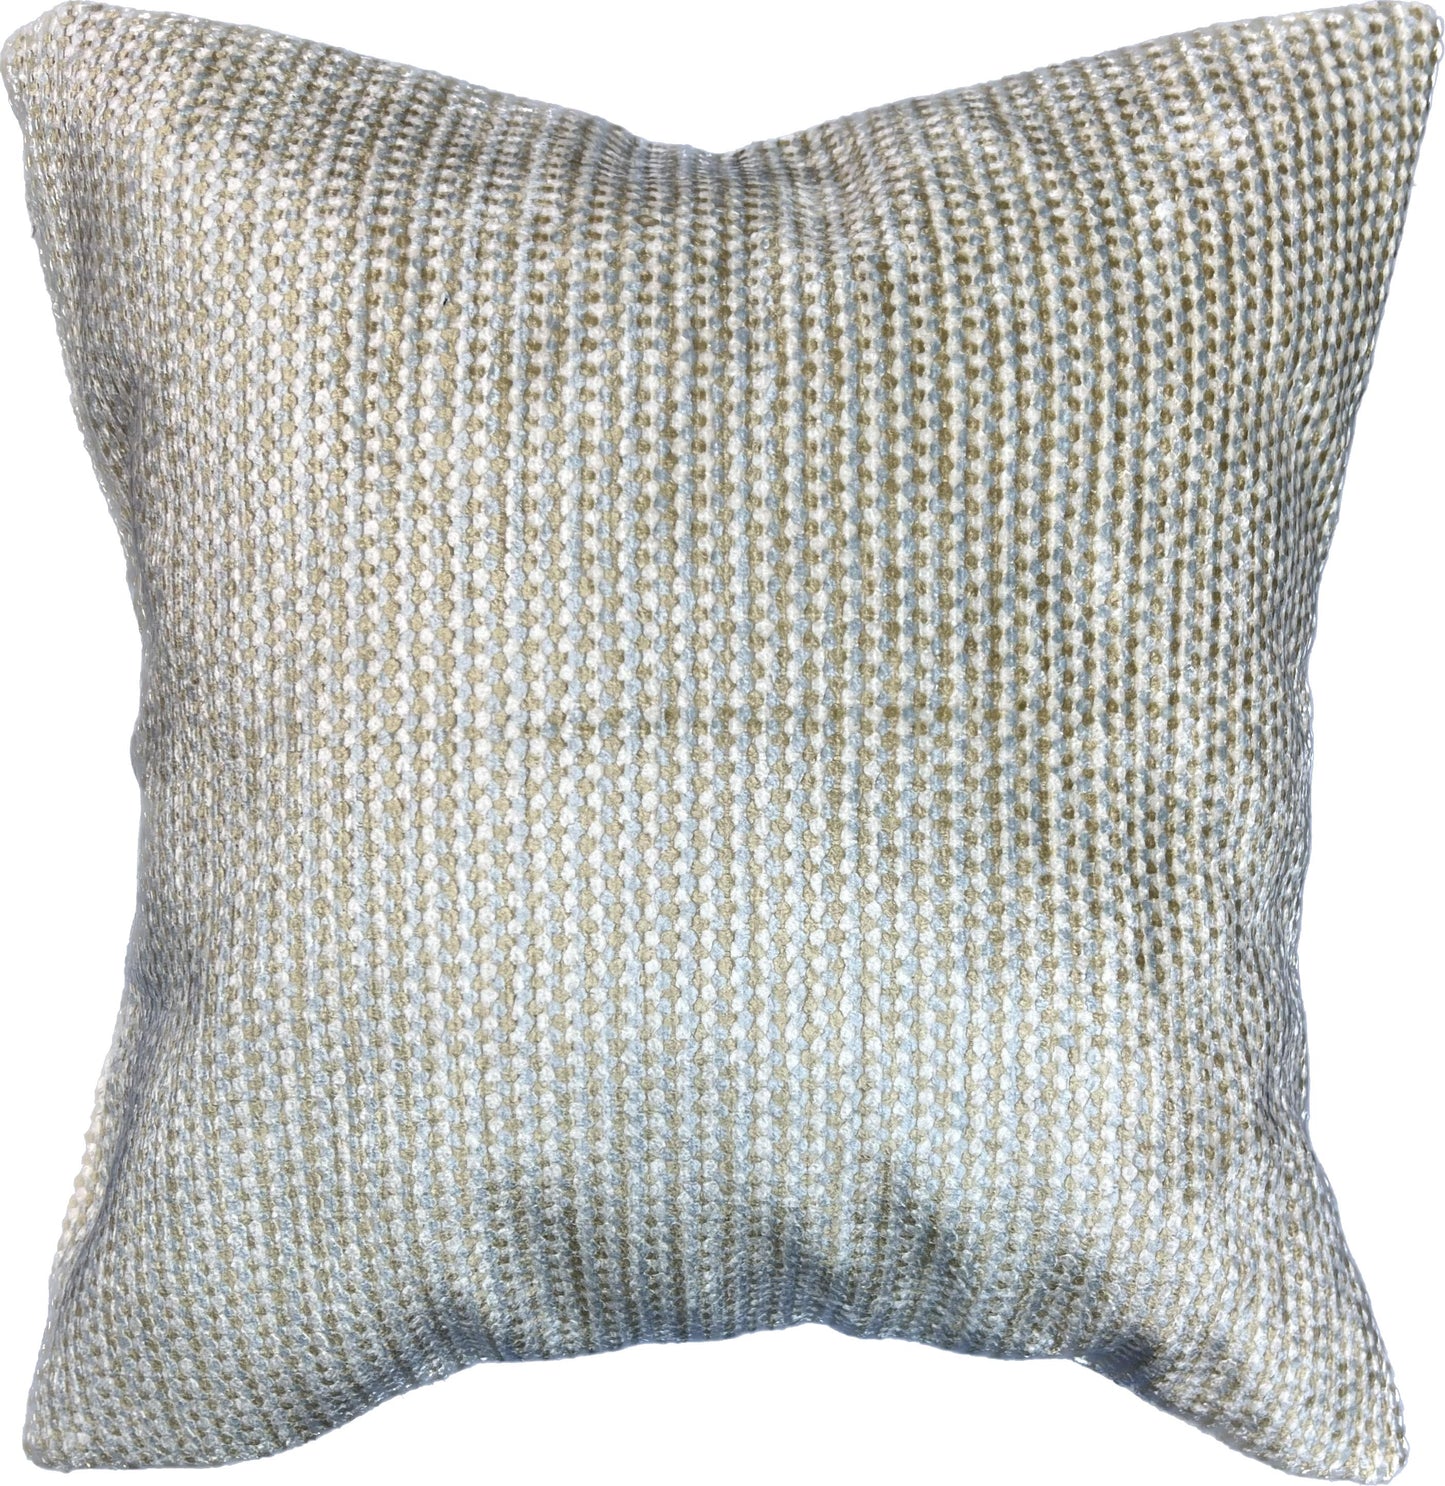 18"x18"  Chenille Dot Pillow Cover